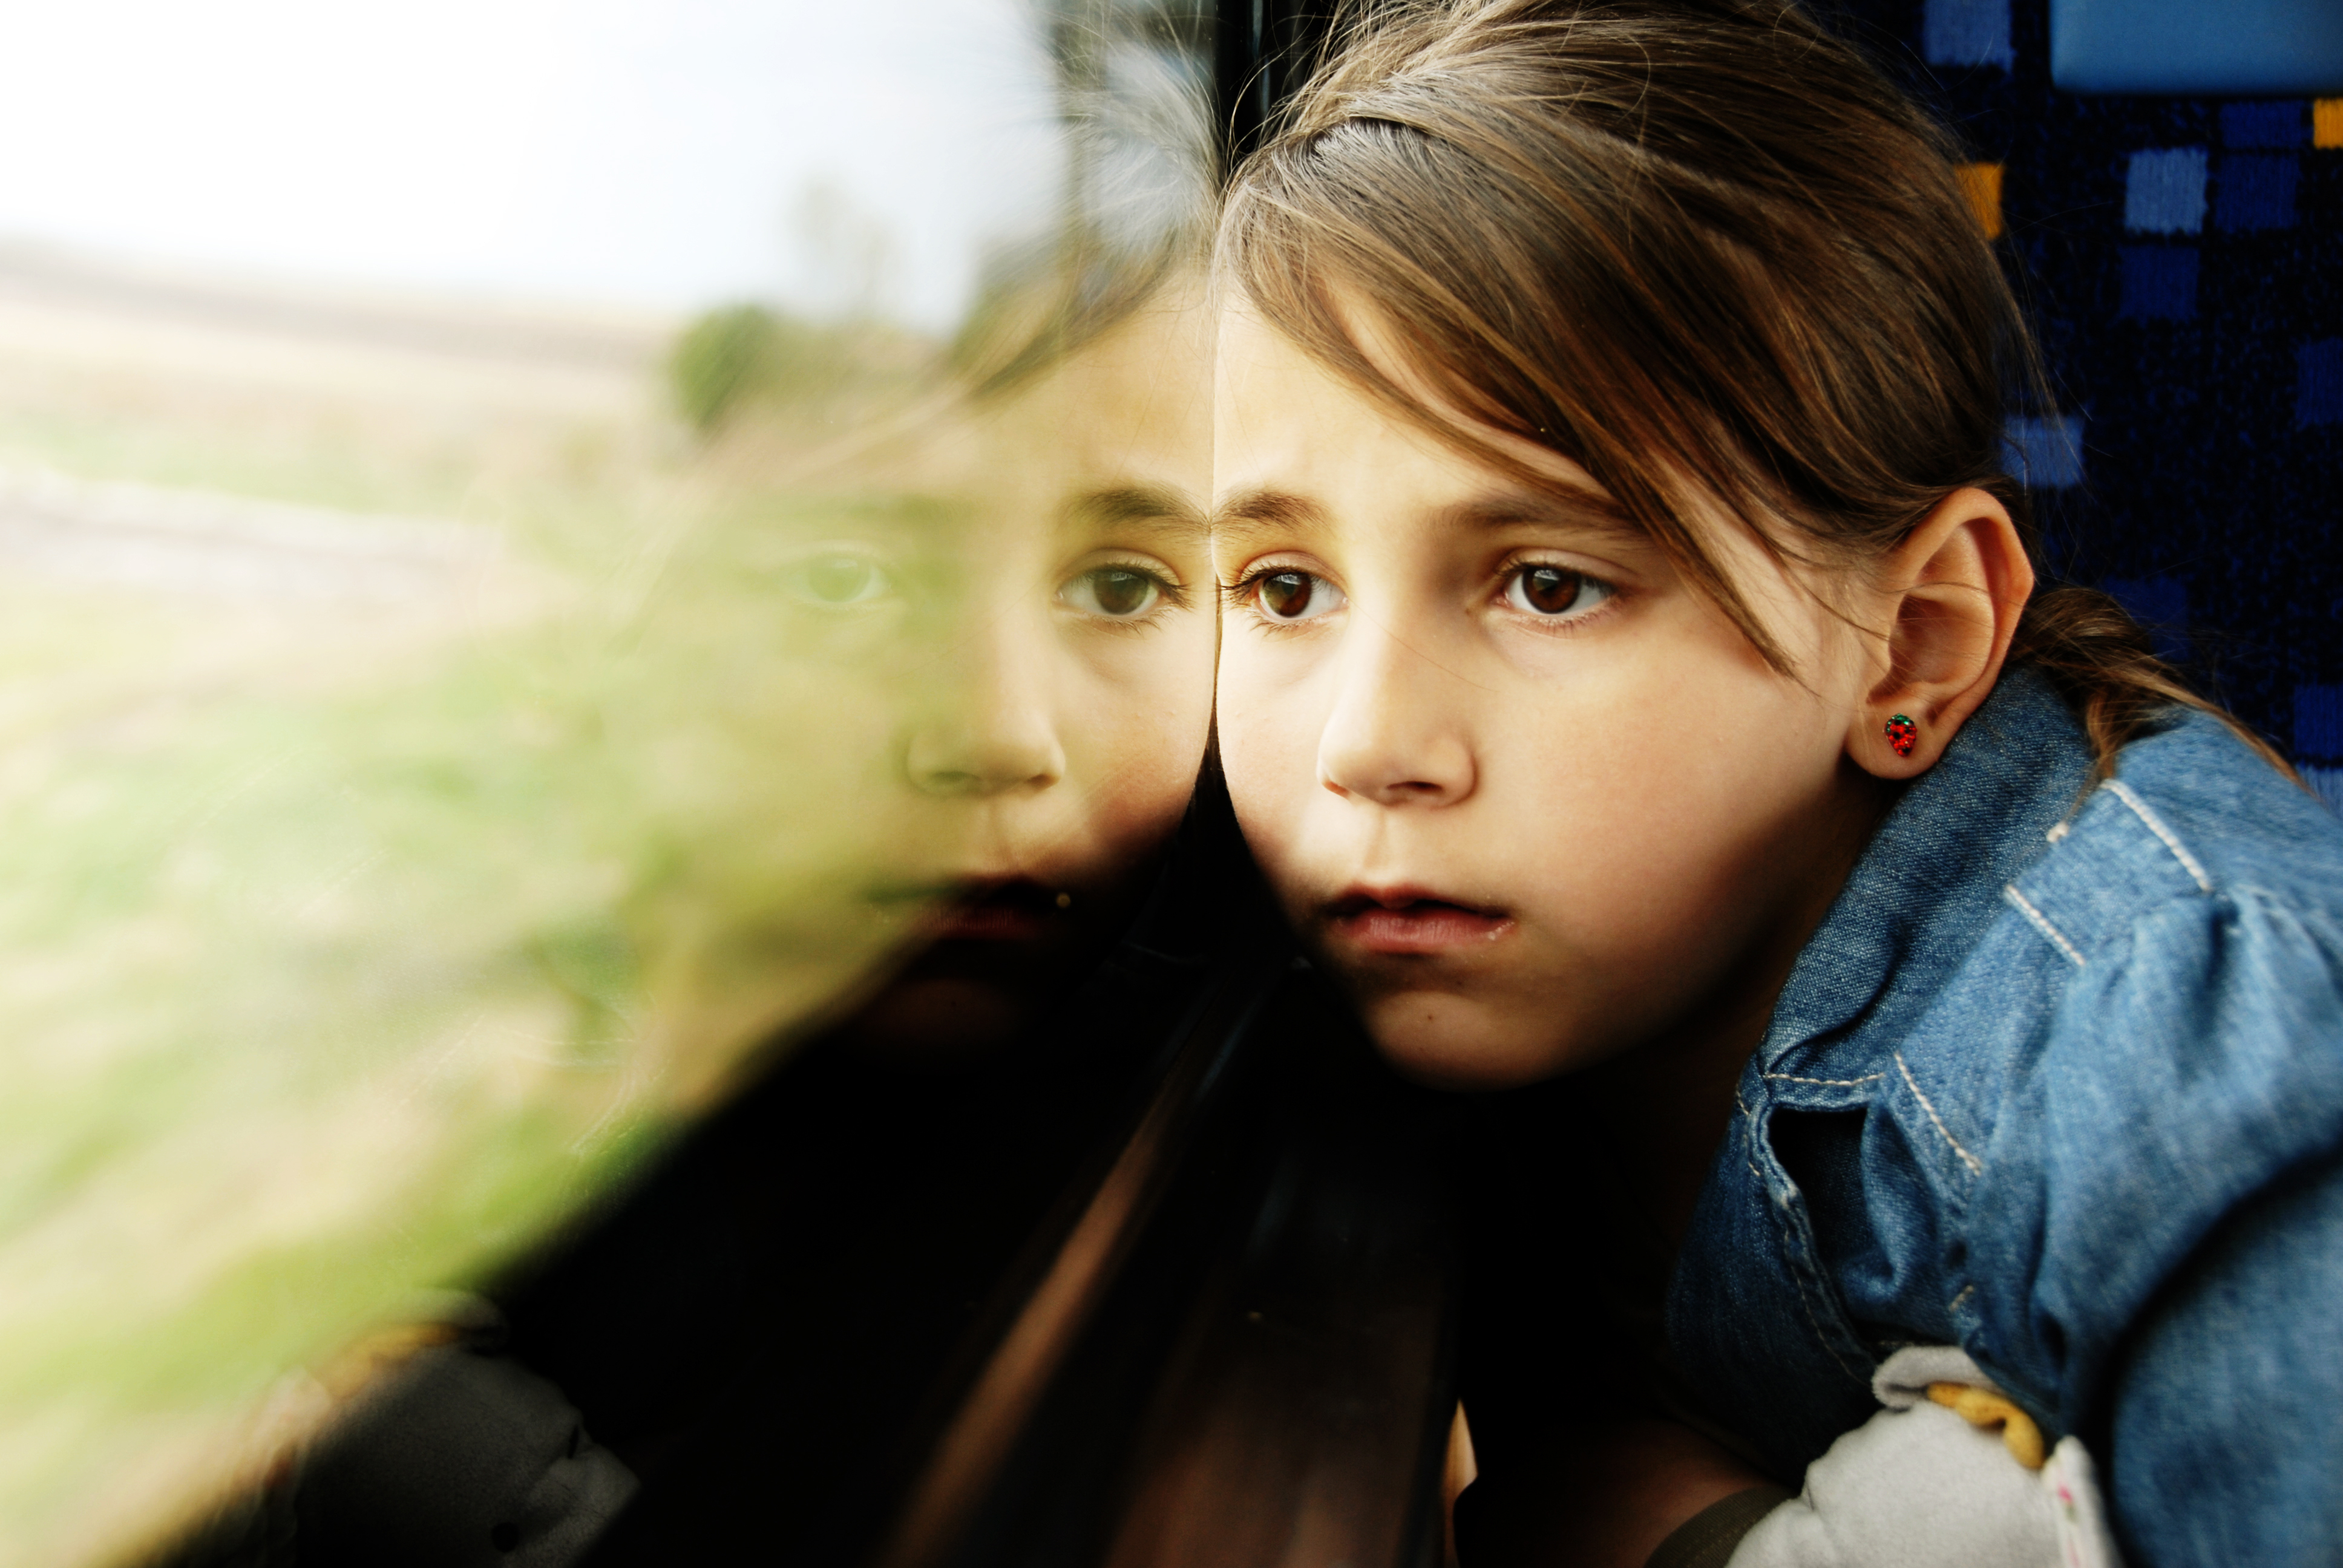 Little girl looking through window | Source: Shutterstock.com